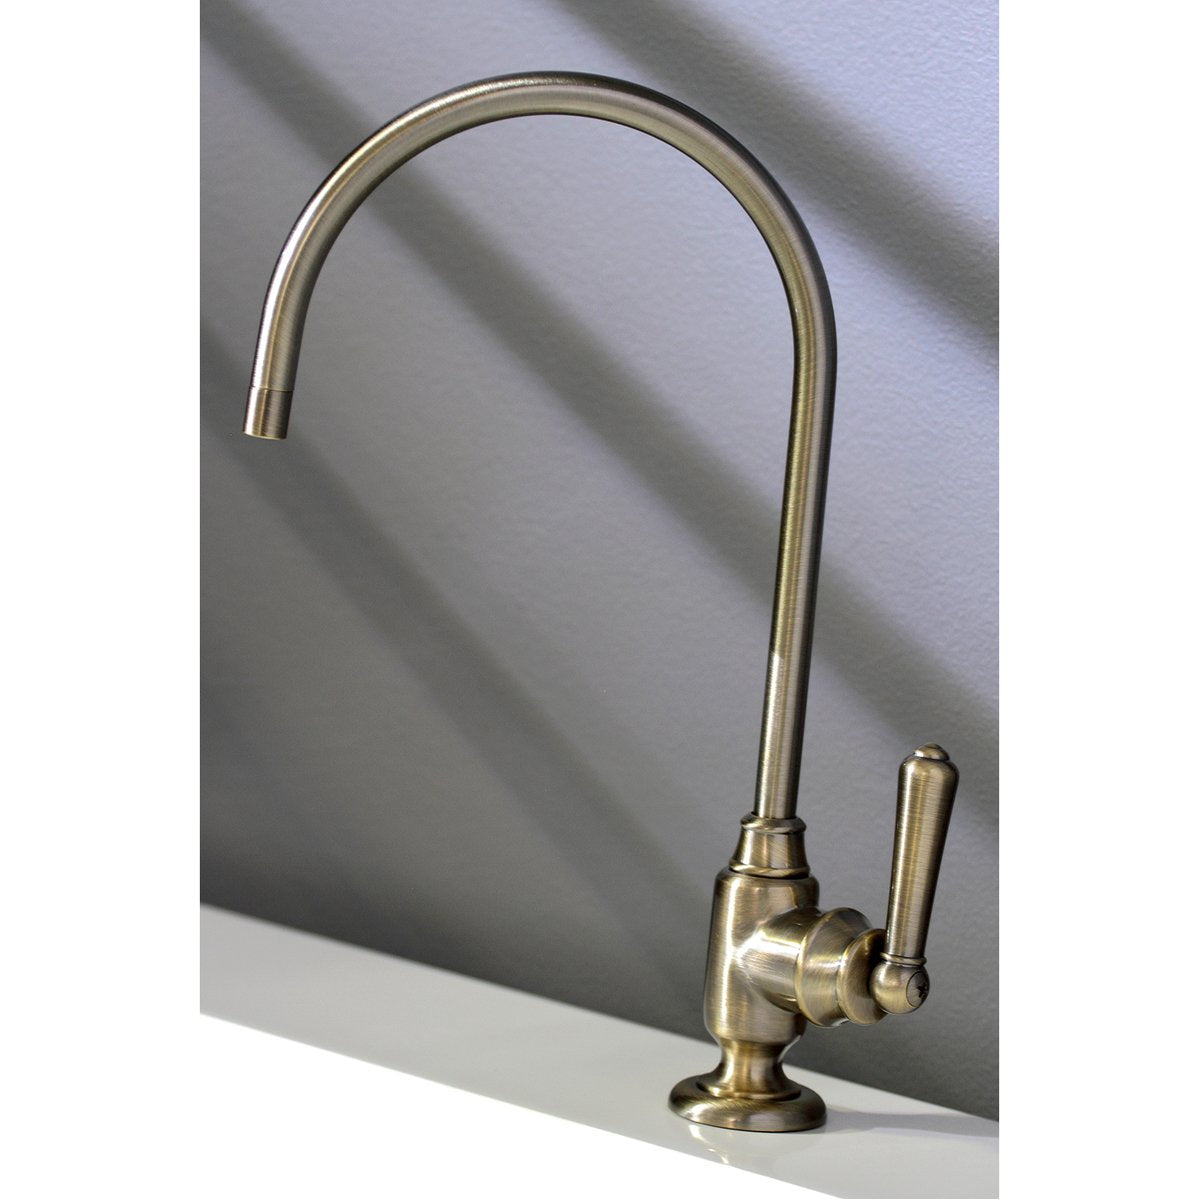 Kingston Brass Magellan Single-Handle Water Filtration Faucet